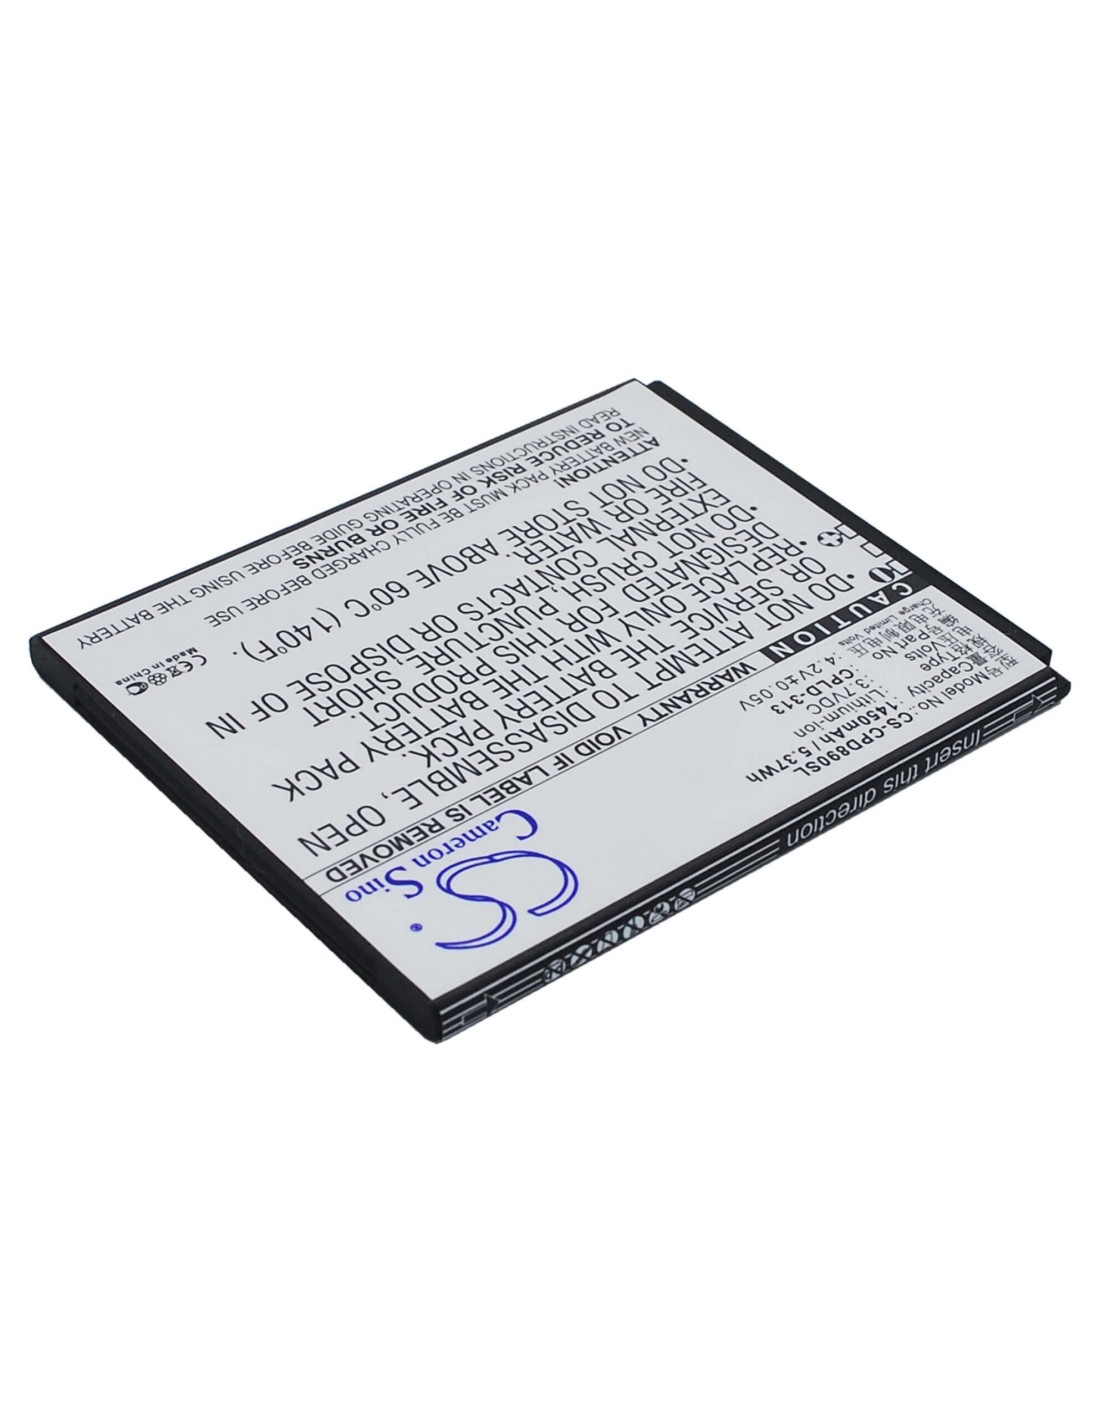 Battery for Coolpad 8908, 4 mini 3.7V, 1450mAh - 5.37Wh